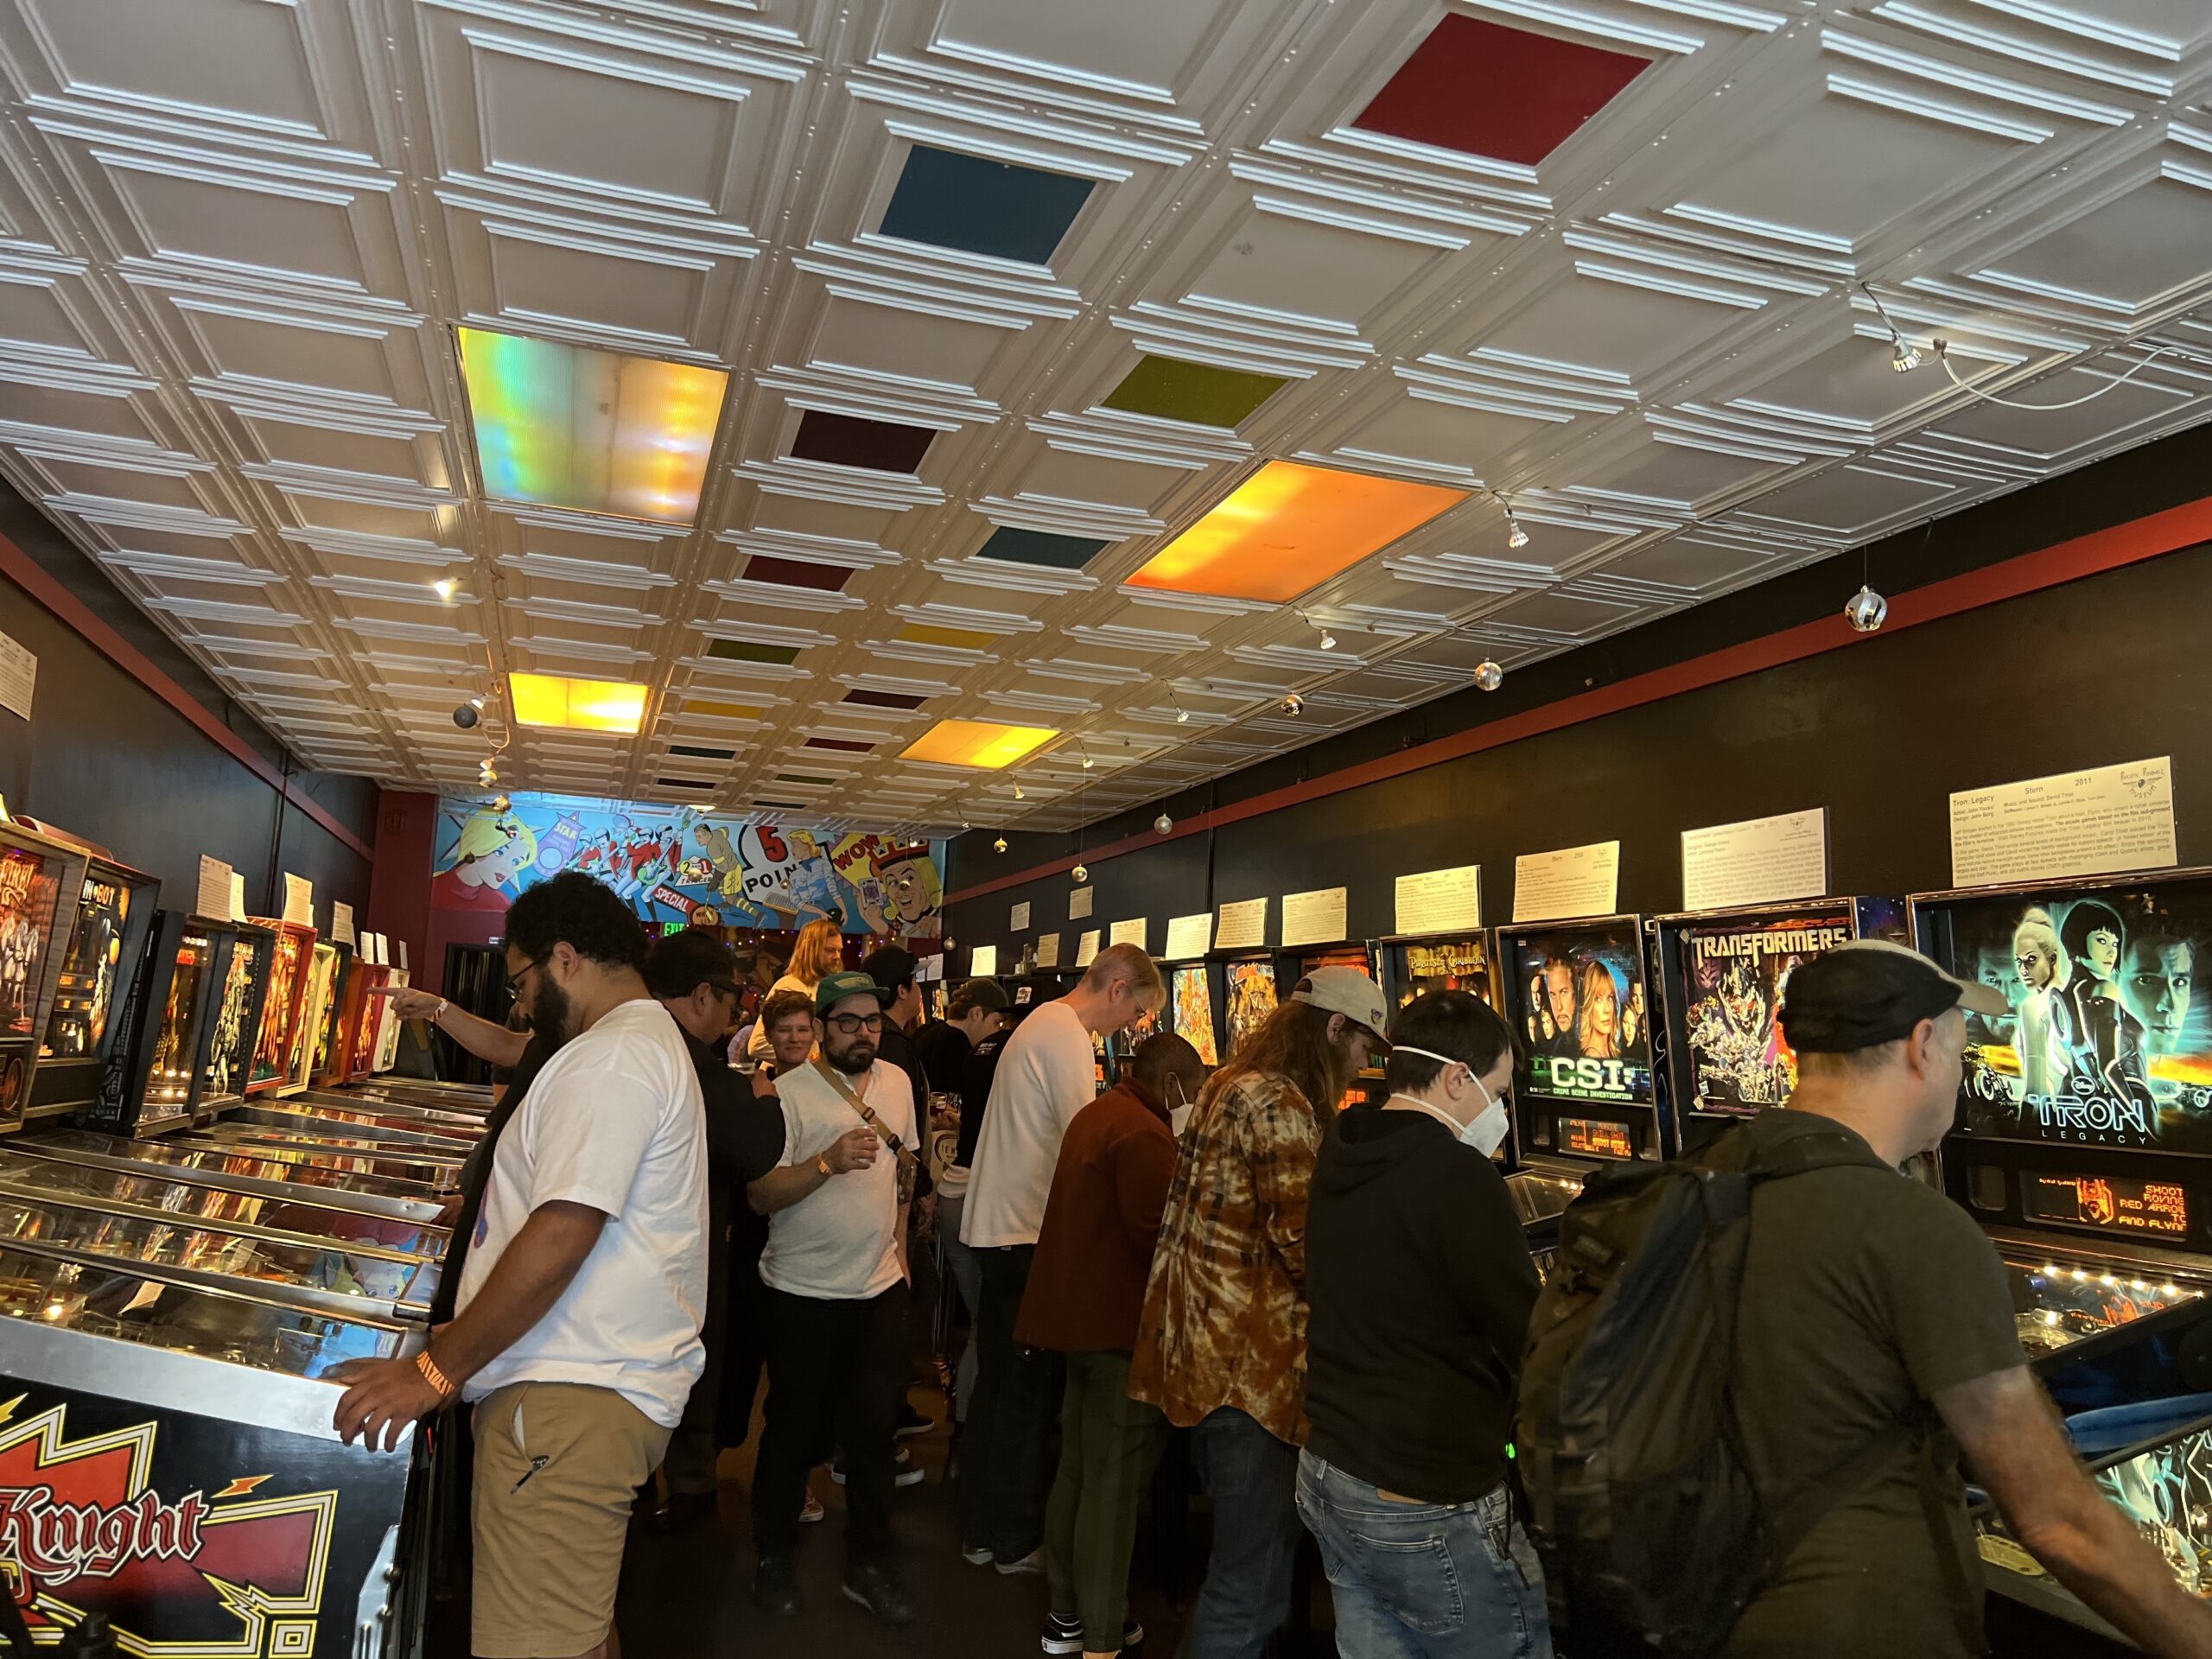 Alameda pinball museum has the will but is still seeking a way